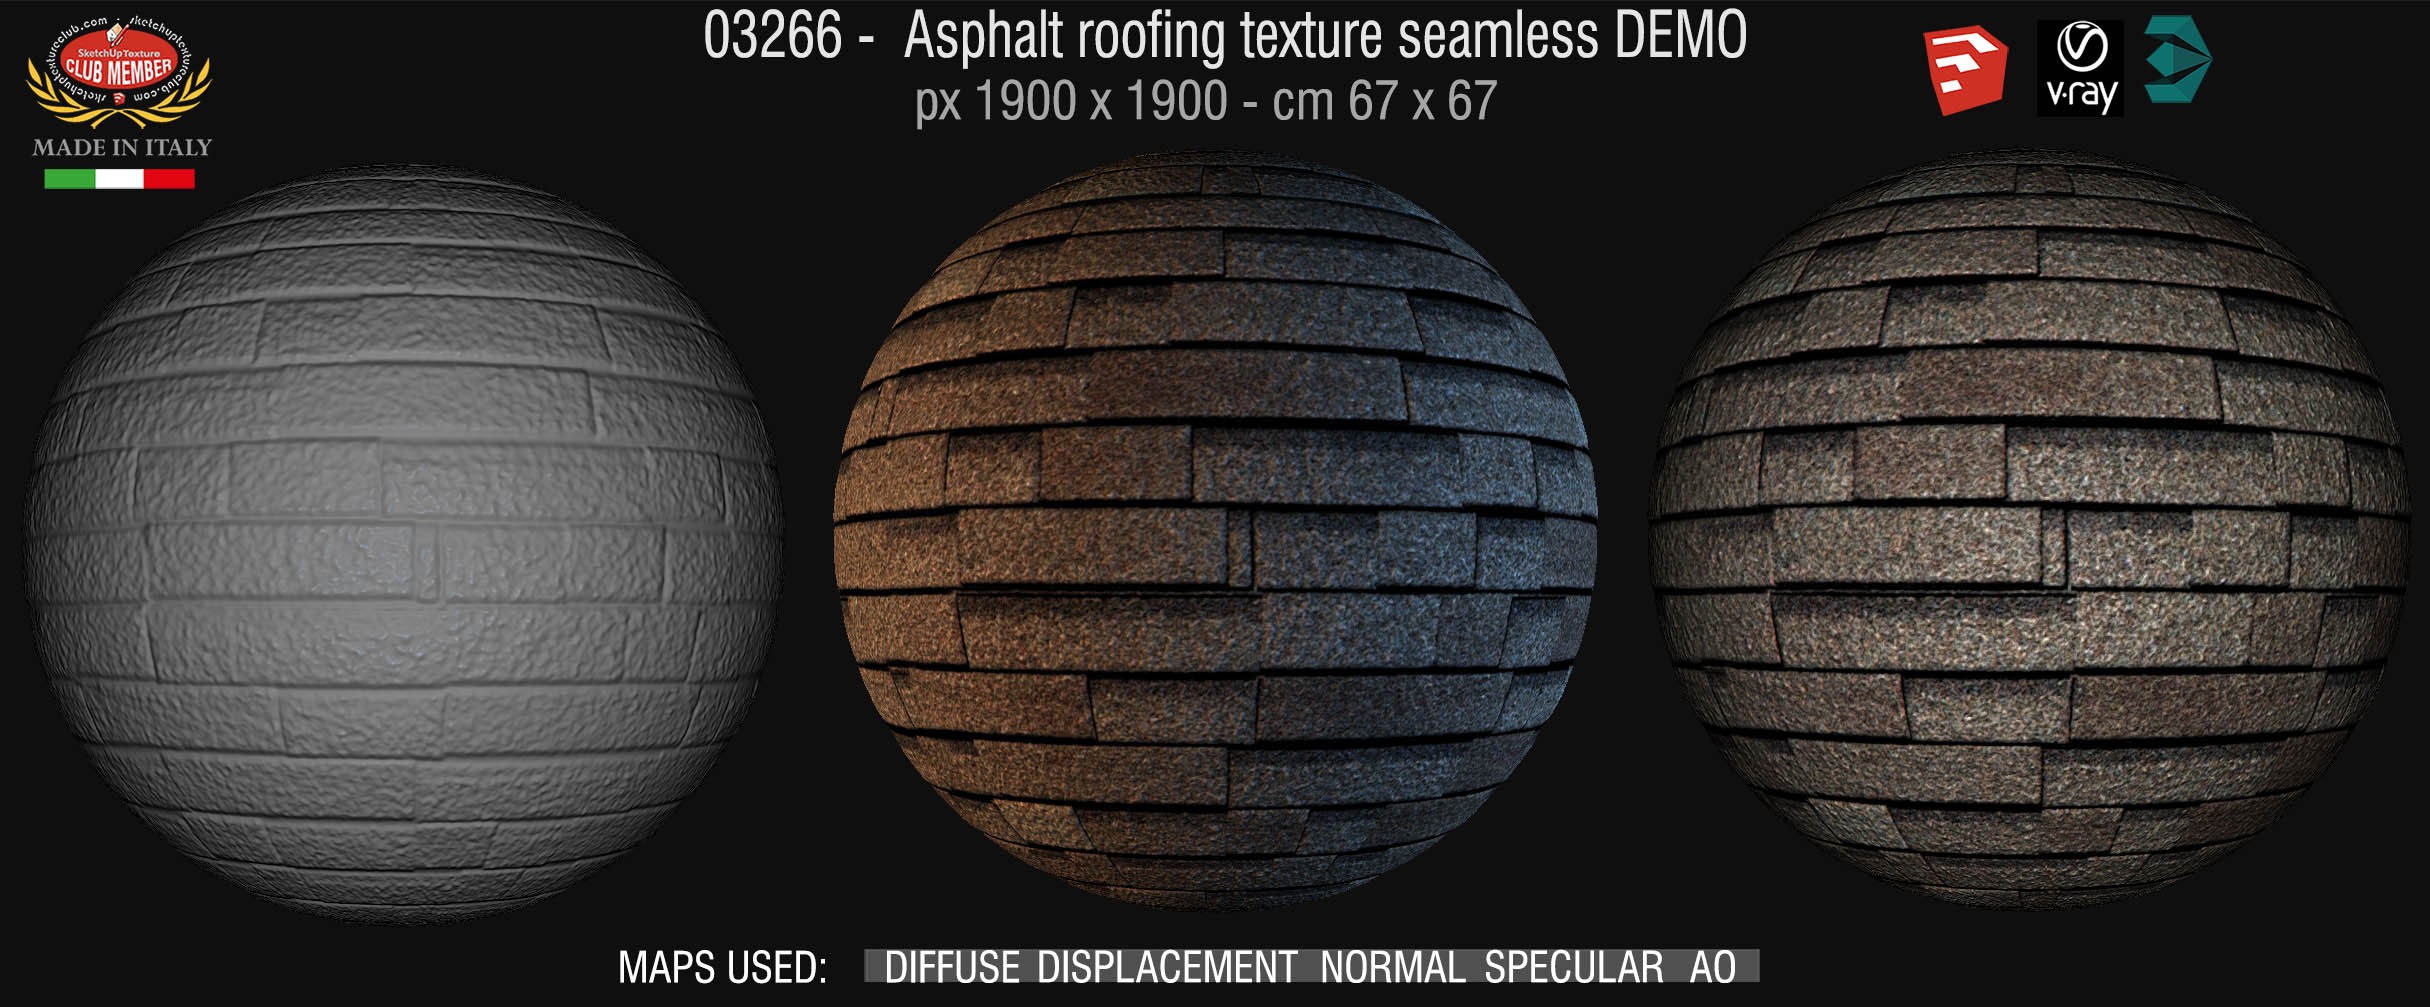 03266 Asphalt roofing texture seamless + maps DEMO